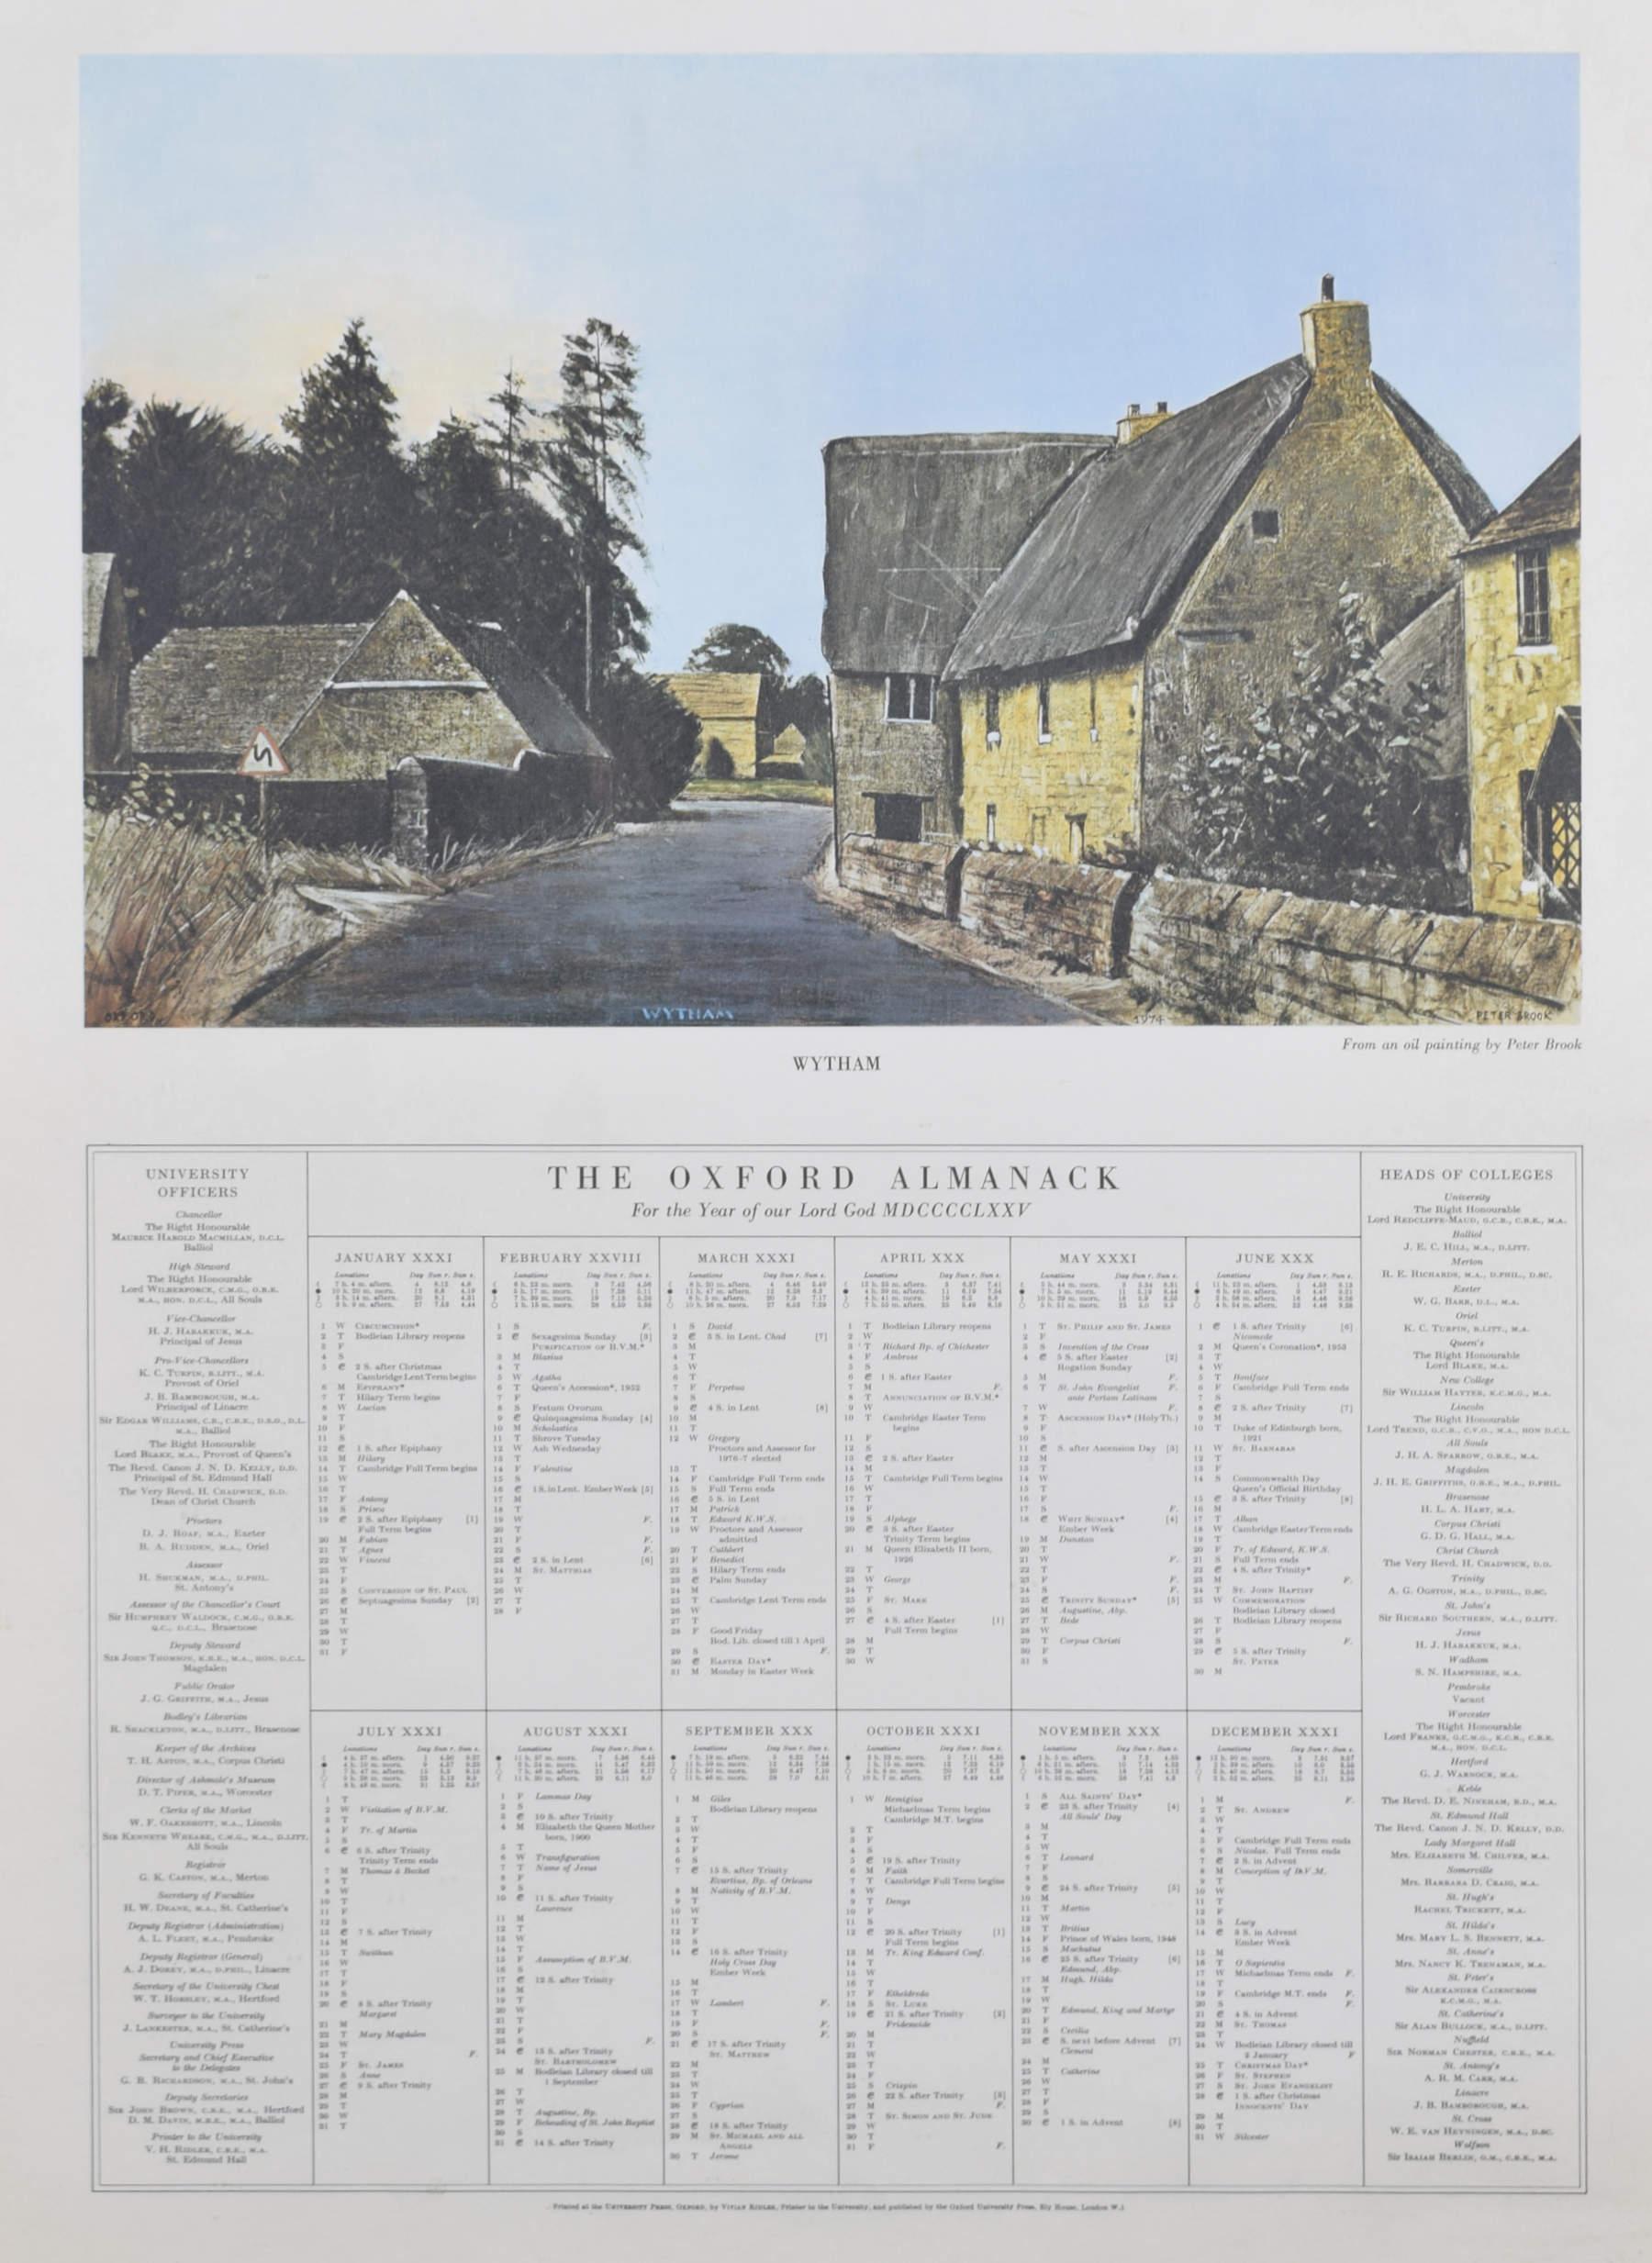 Michael Oelman Landscape Print - Wytham, Oxfordshire Oxford Almanac 1975 lithograph after Peter Brooke